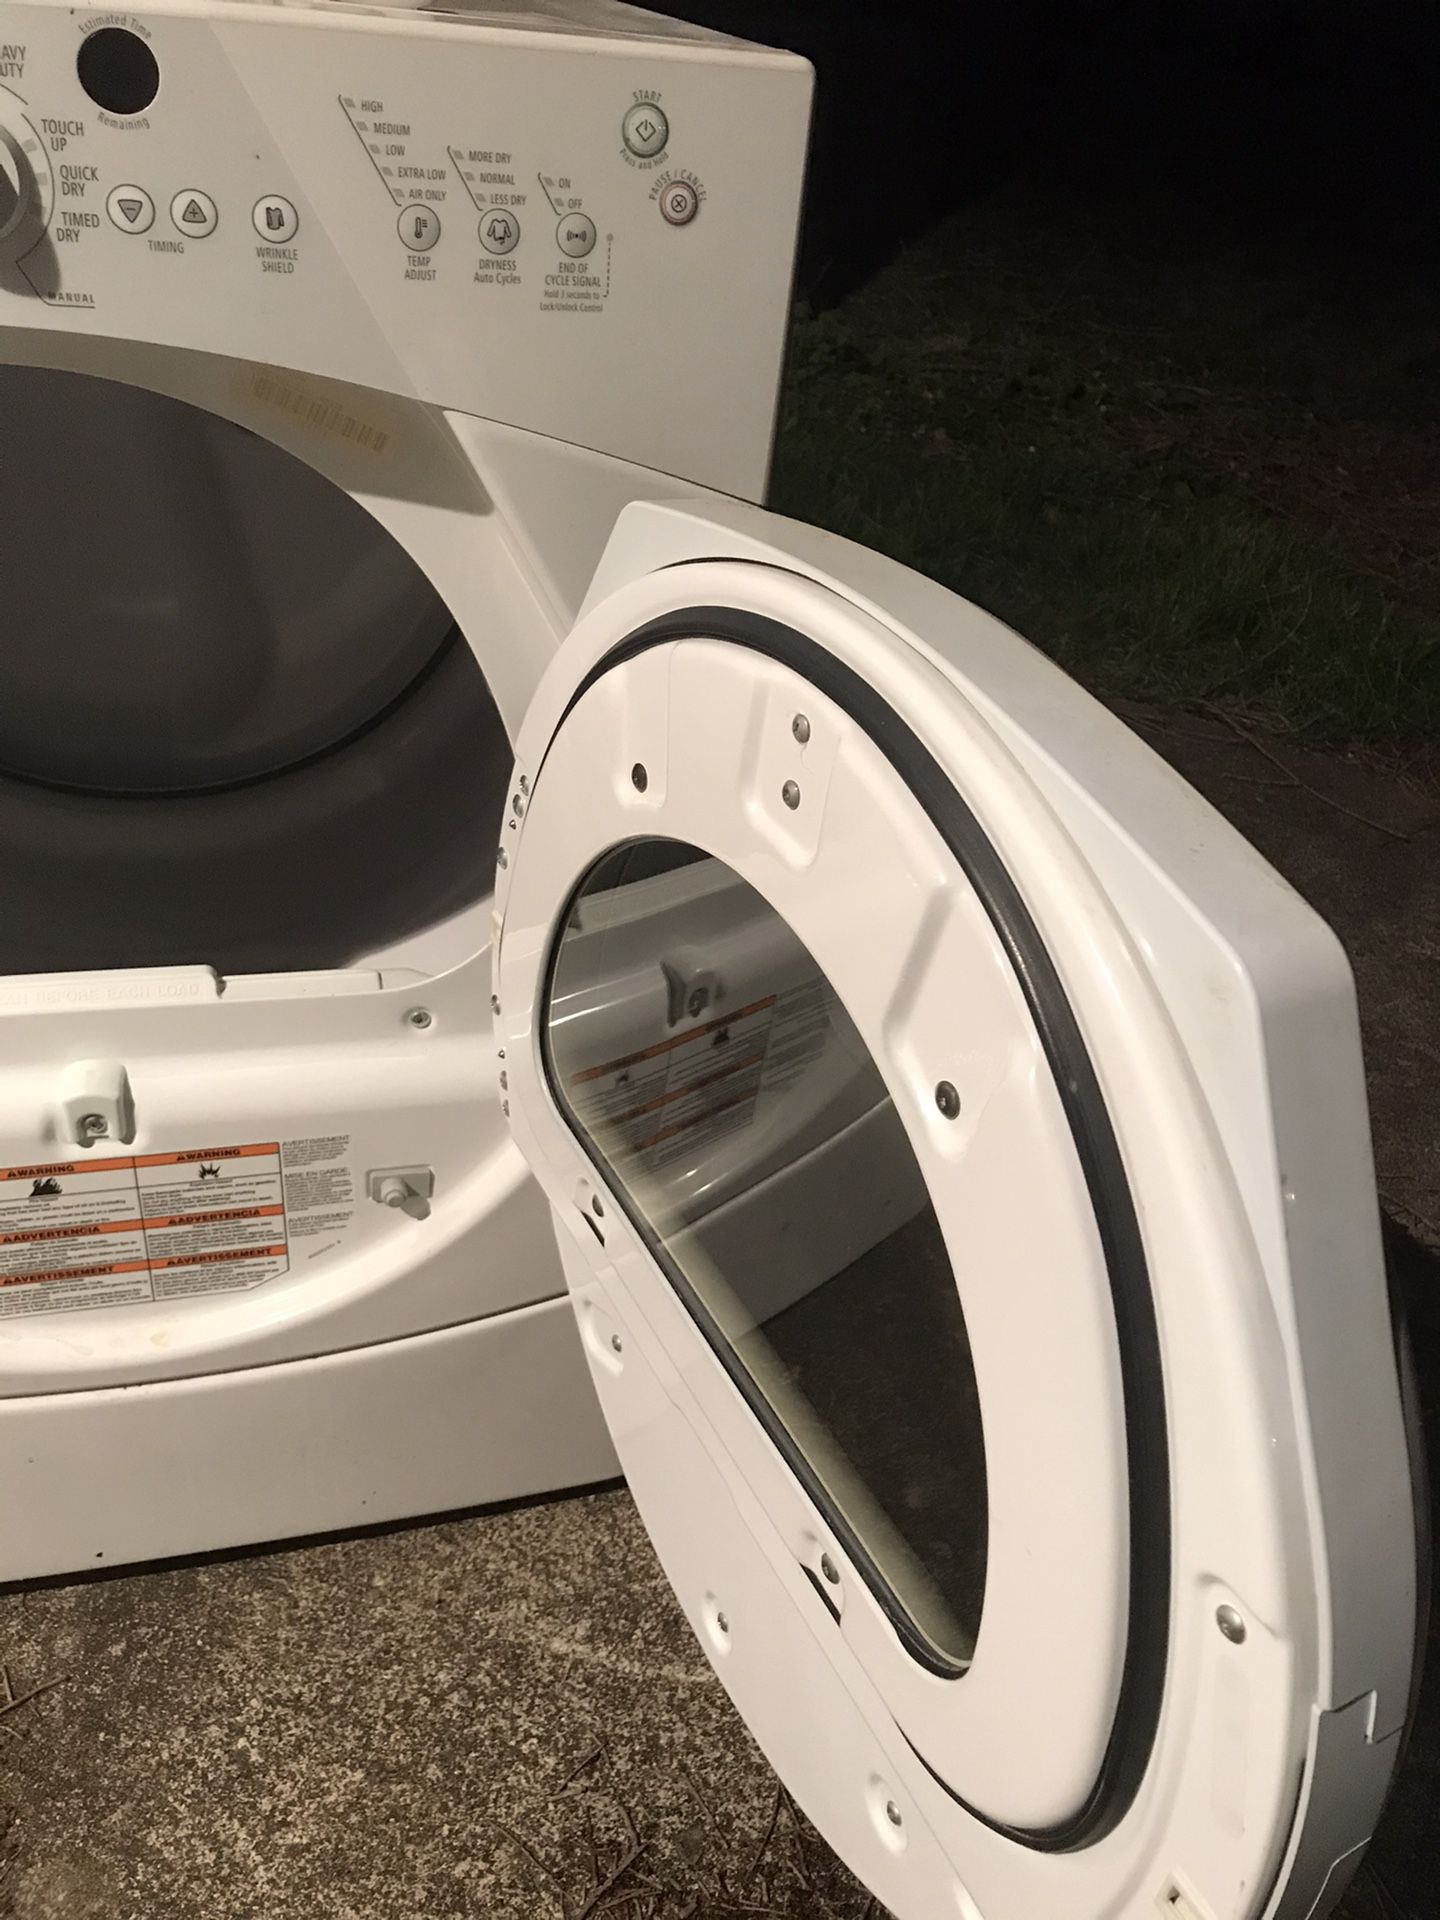 Dryer-whirlpool Electric